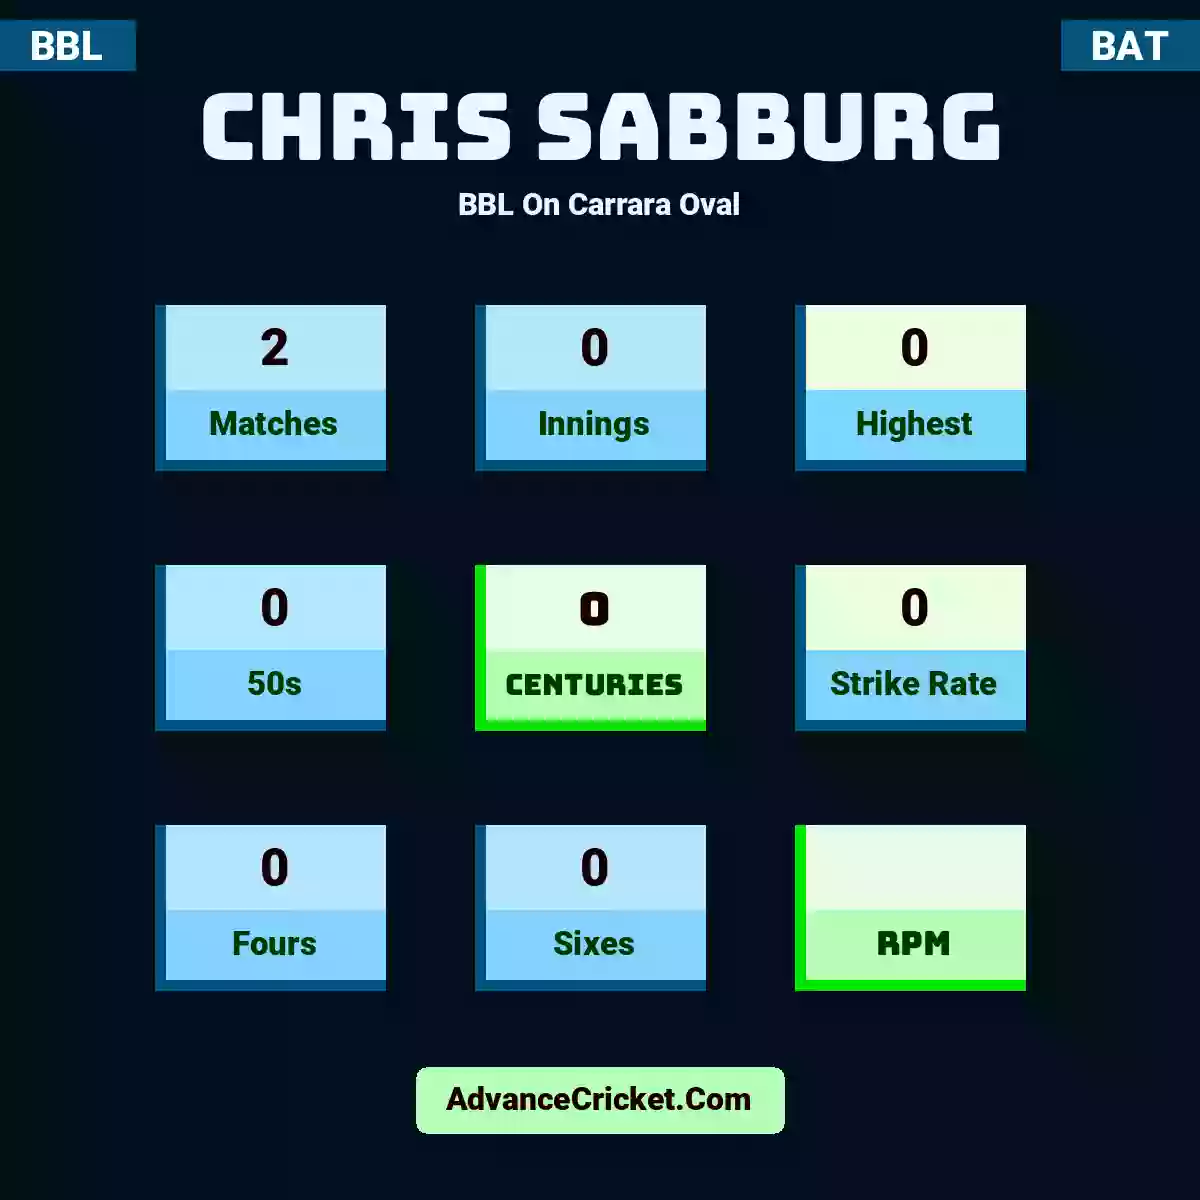 Chris Sabburg BBL  On Carrara Oval, Chris Sabburg played 2 matches, scored 0 runs as highest, 0 half-centuries, and 0 centuries, with a strike rate of 0. C.Sabburg hit 0 fours and 0 sixes.